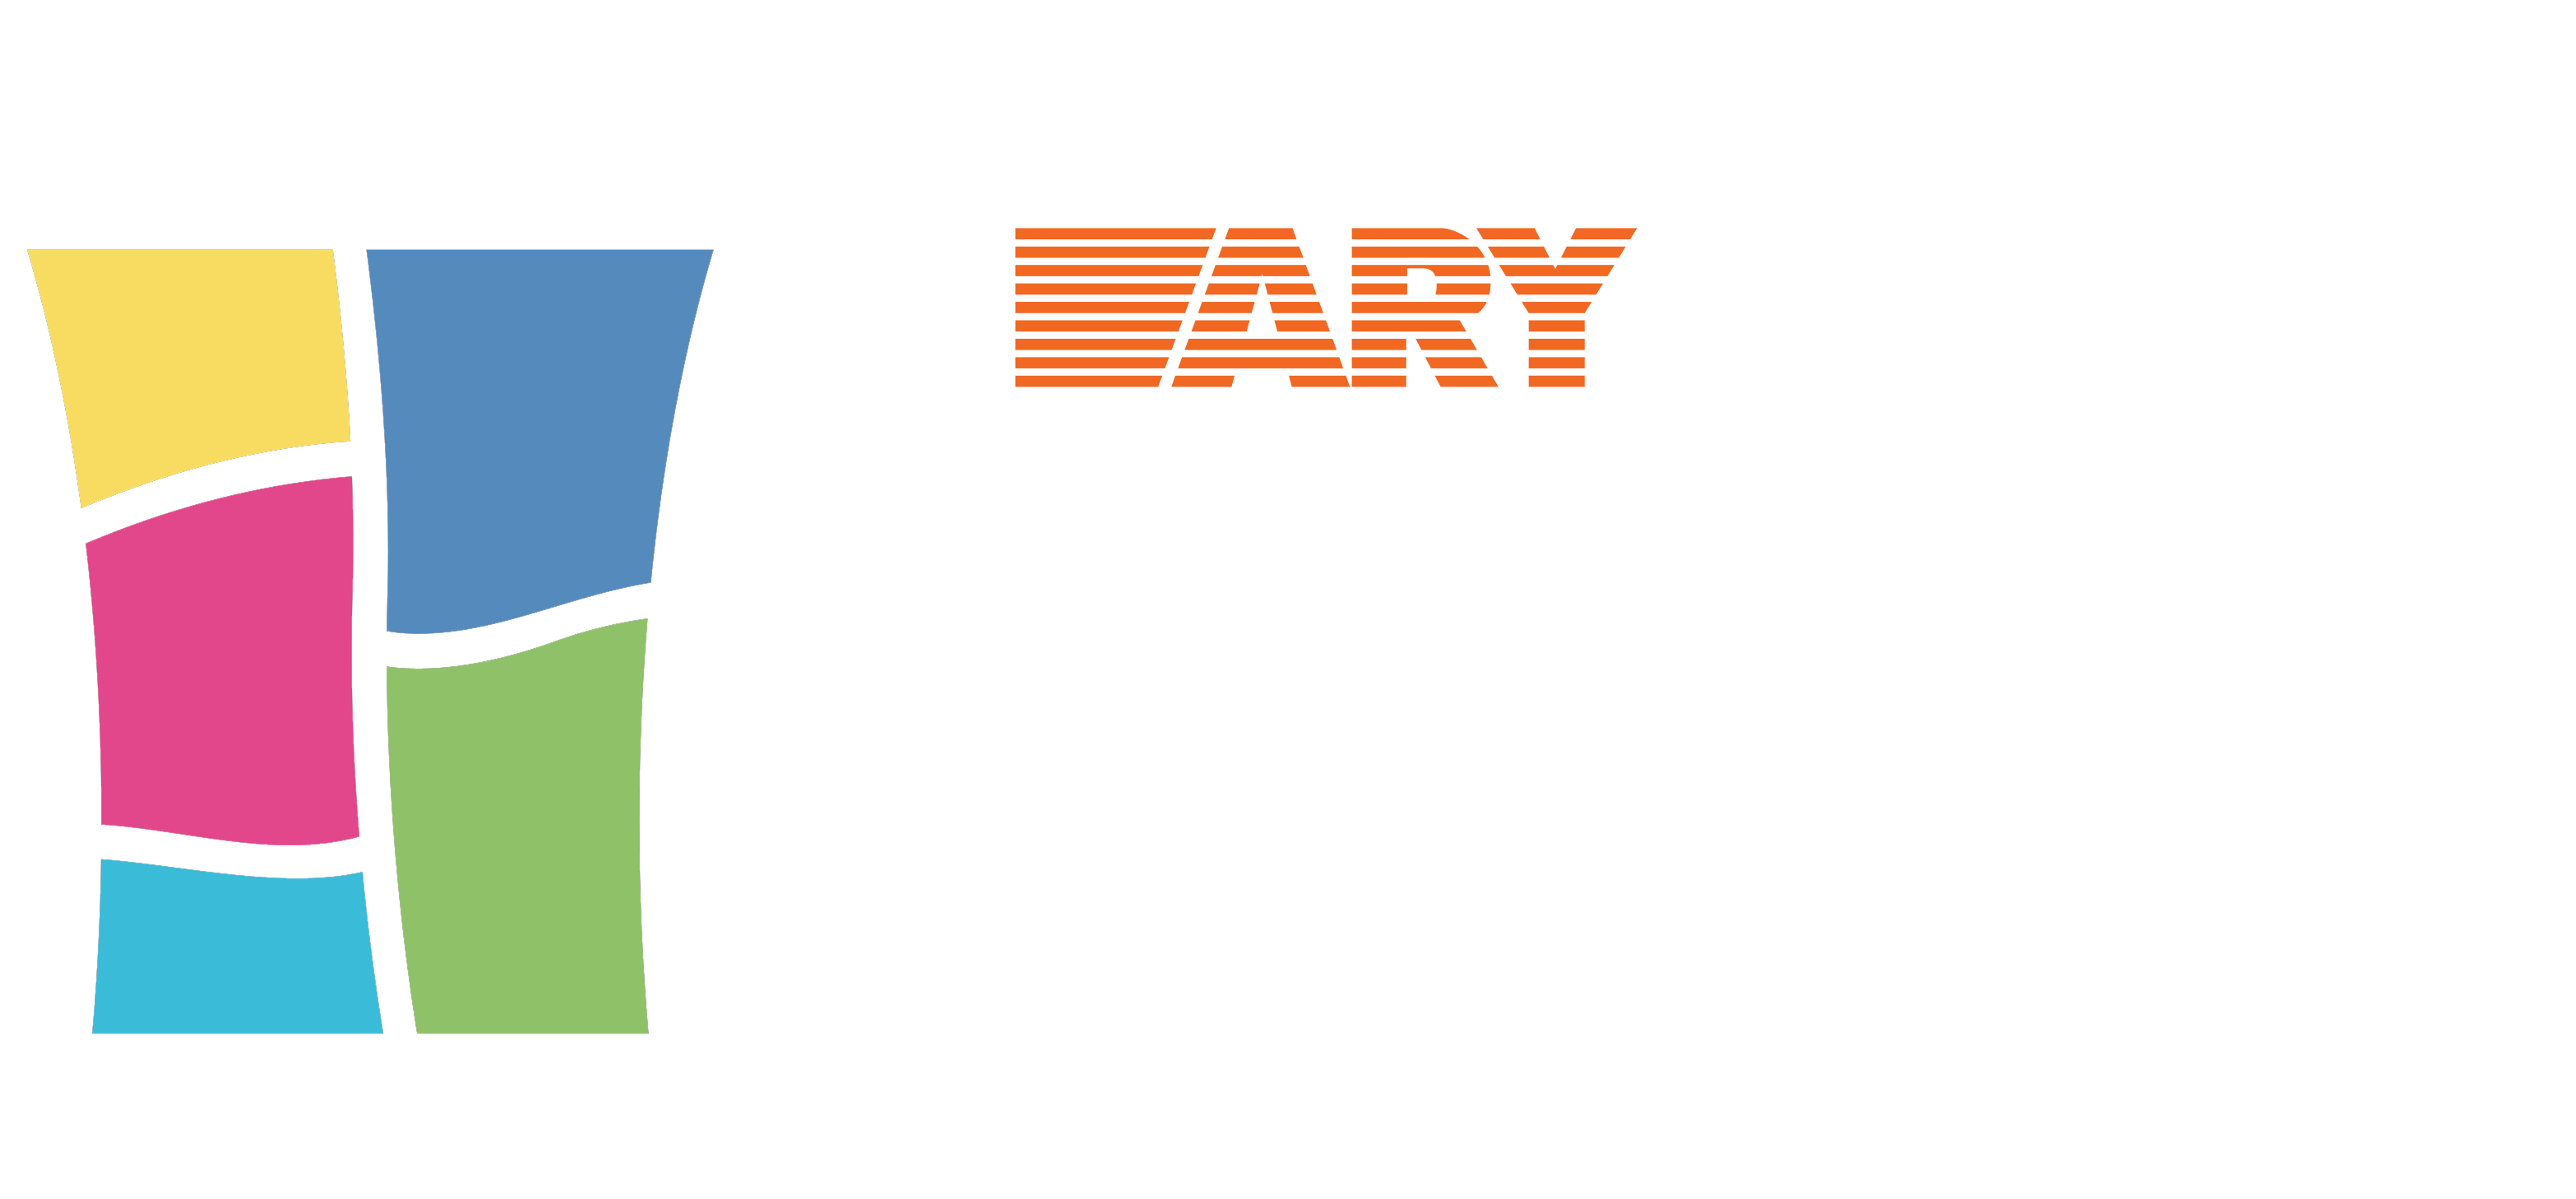 ARY Sahulat Bazar Pakistan